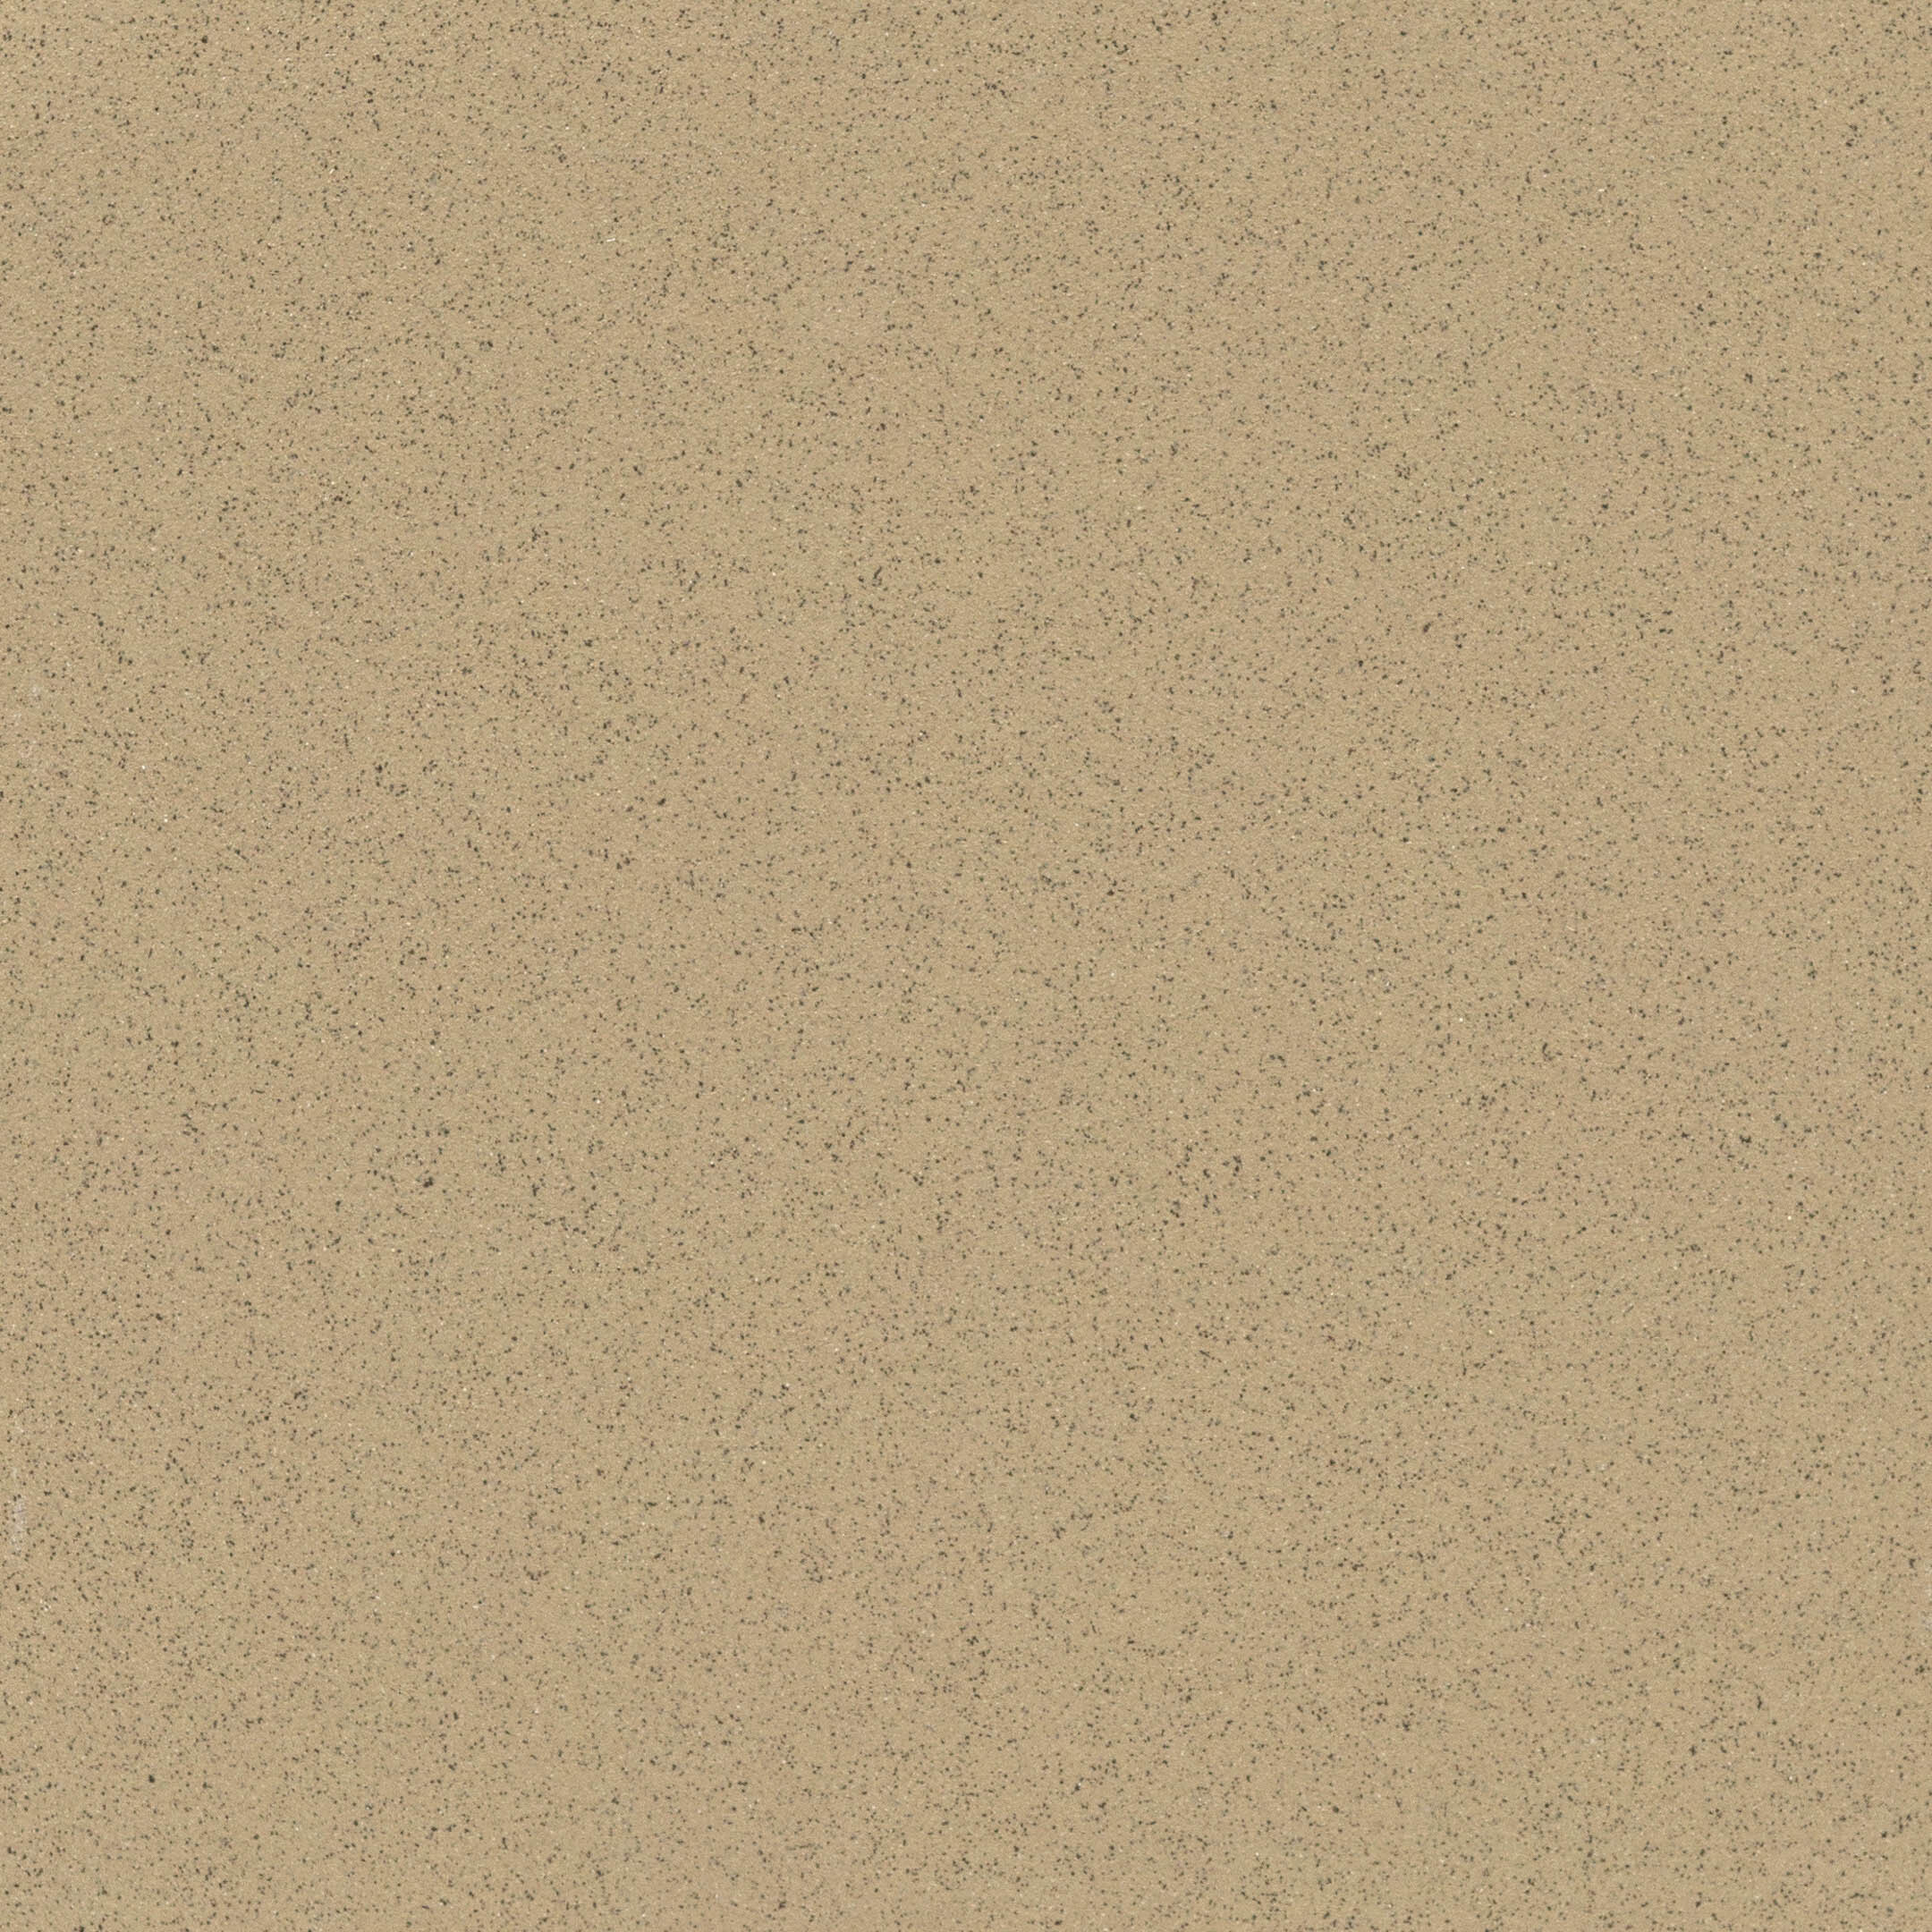 Керамогранит Quadro Decor Грес серый соль-перец 300х300х7 мм (17 шт.=1,53 кв.м) керамогранит quadro decor соль перец 30x30 см 0 99 м² матовый цвет серый